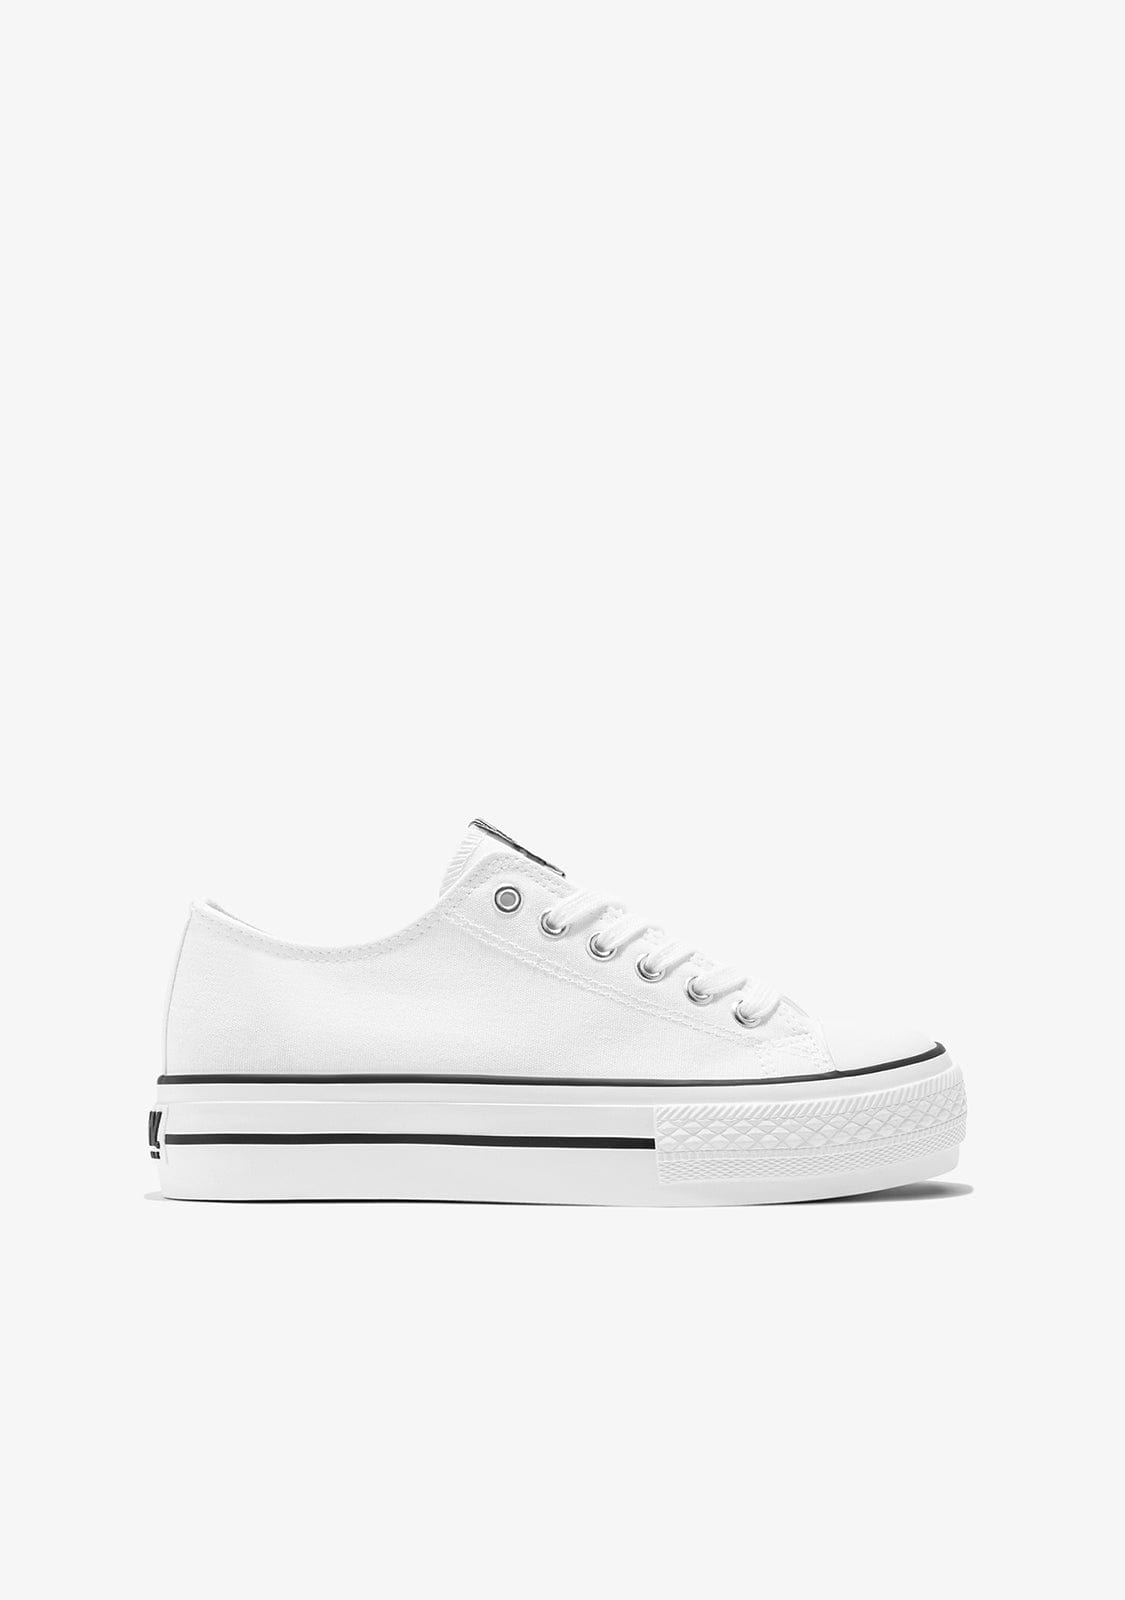 B&W JUNIOR Shoes B&W White Platform Canvas Sneakers